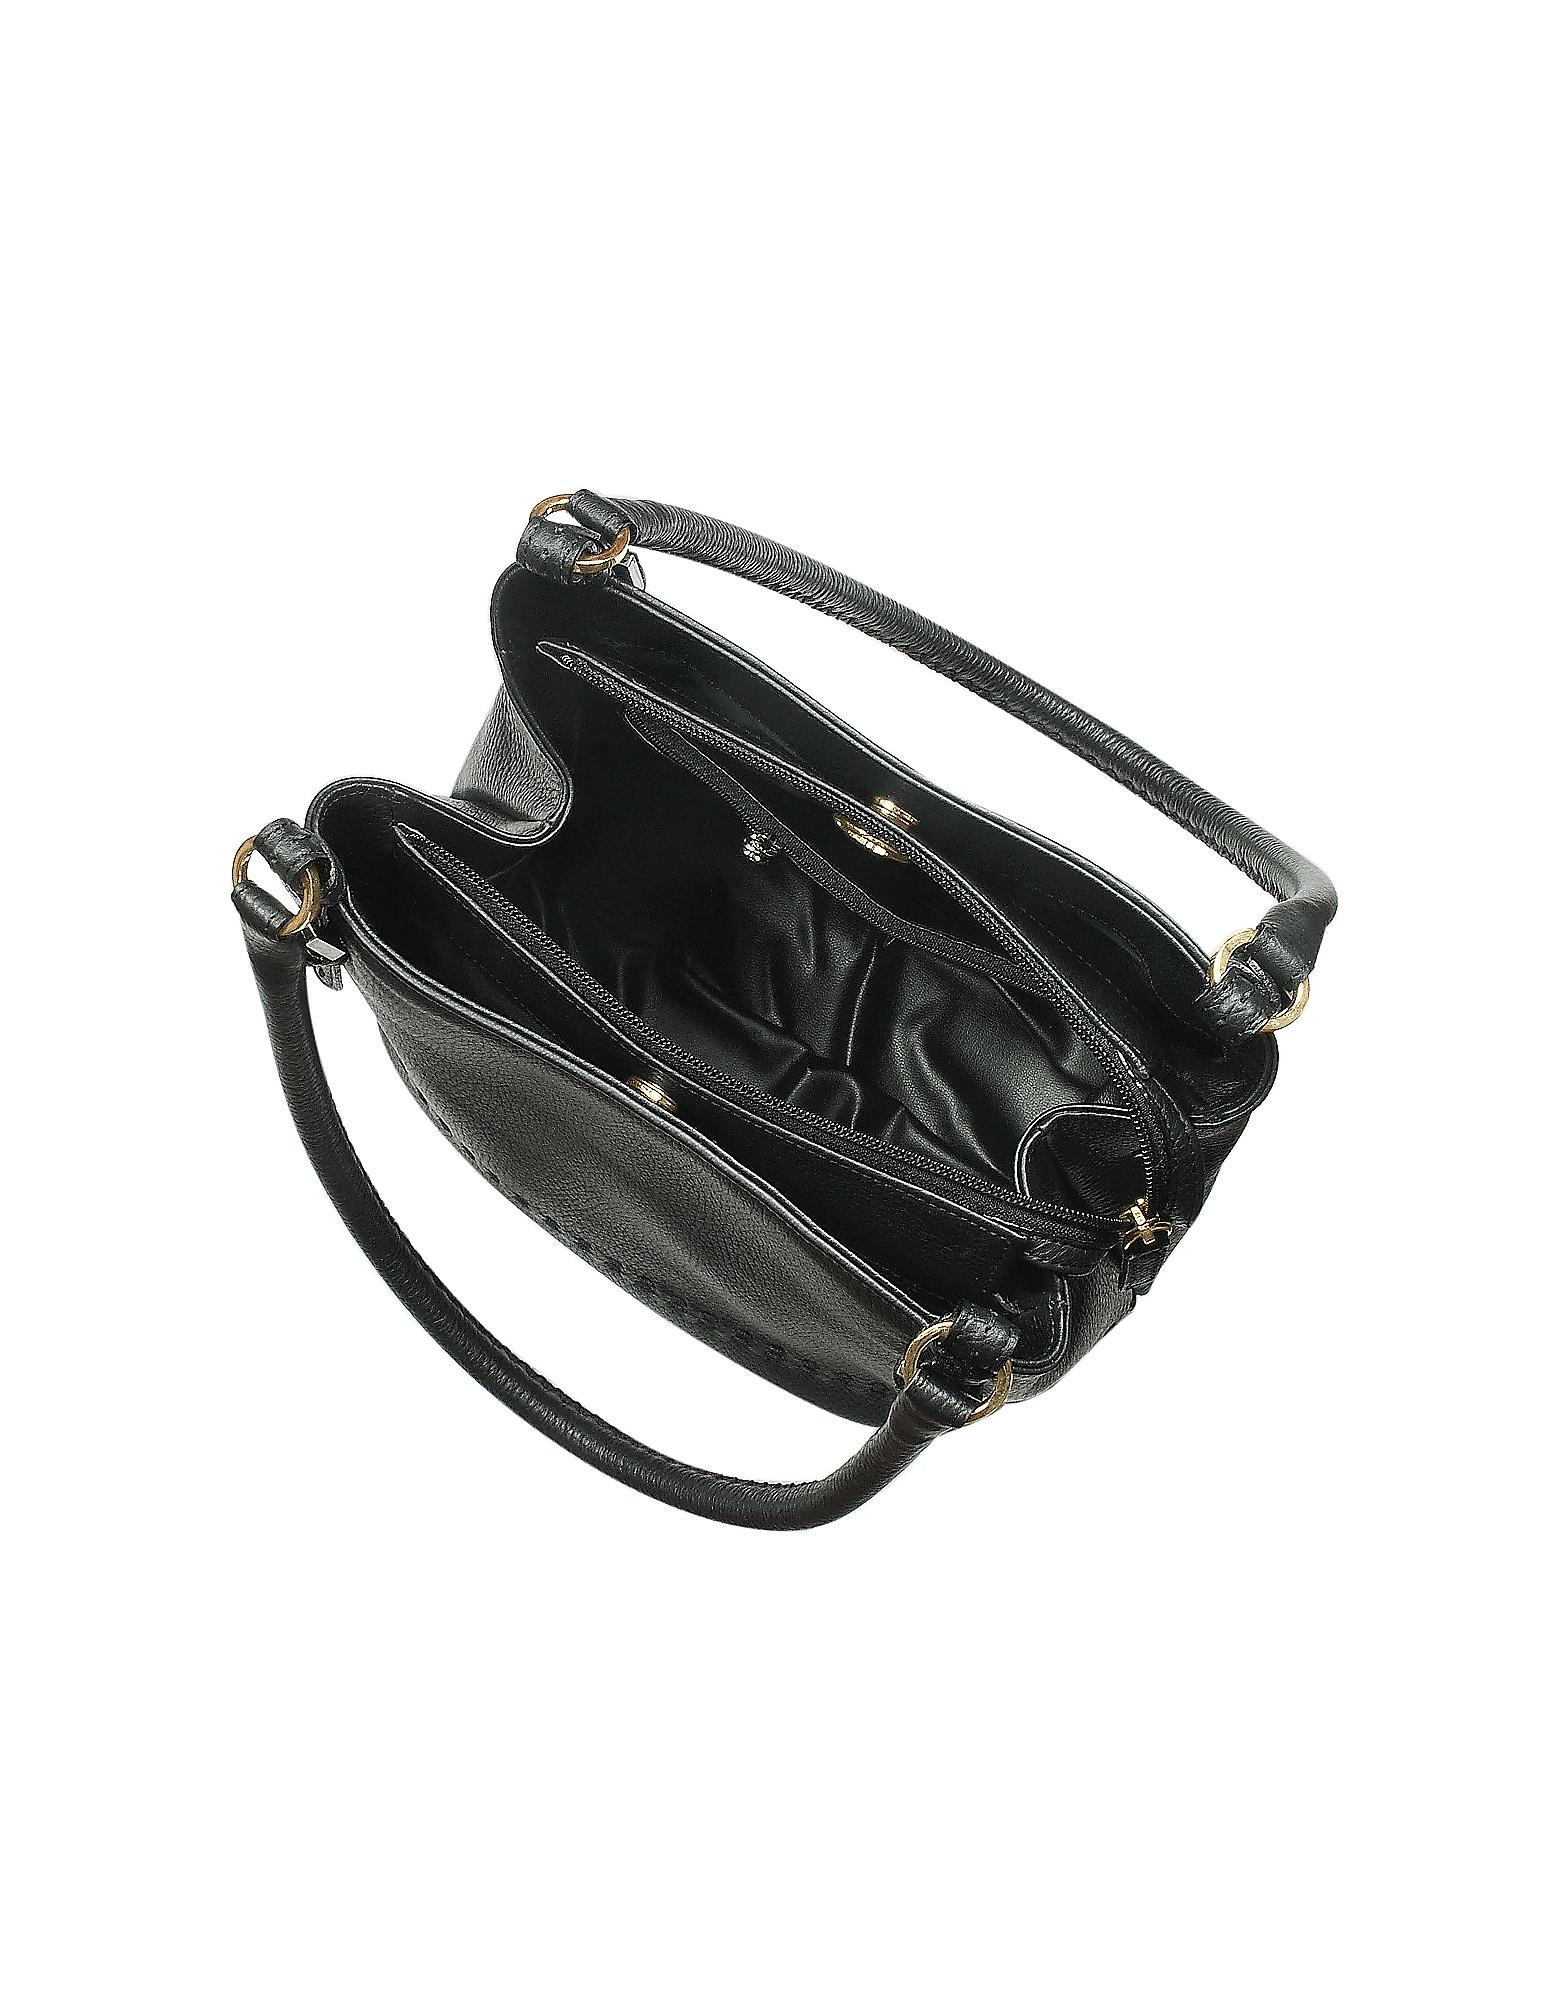 Lyst - Fontanelli Black Stiched Soft Leather Handbag in Black